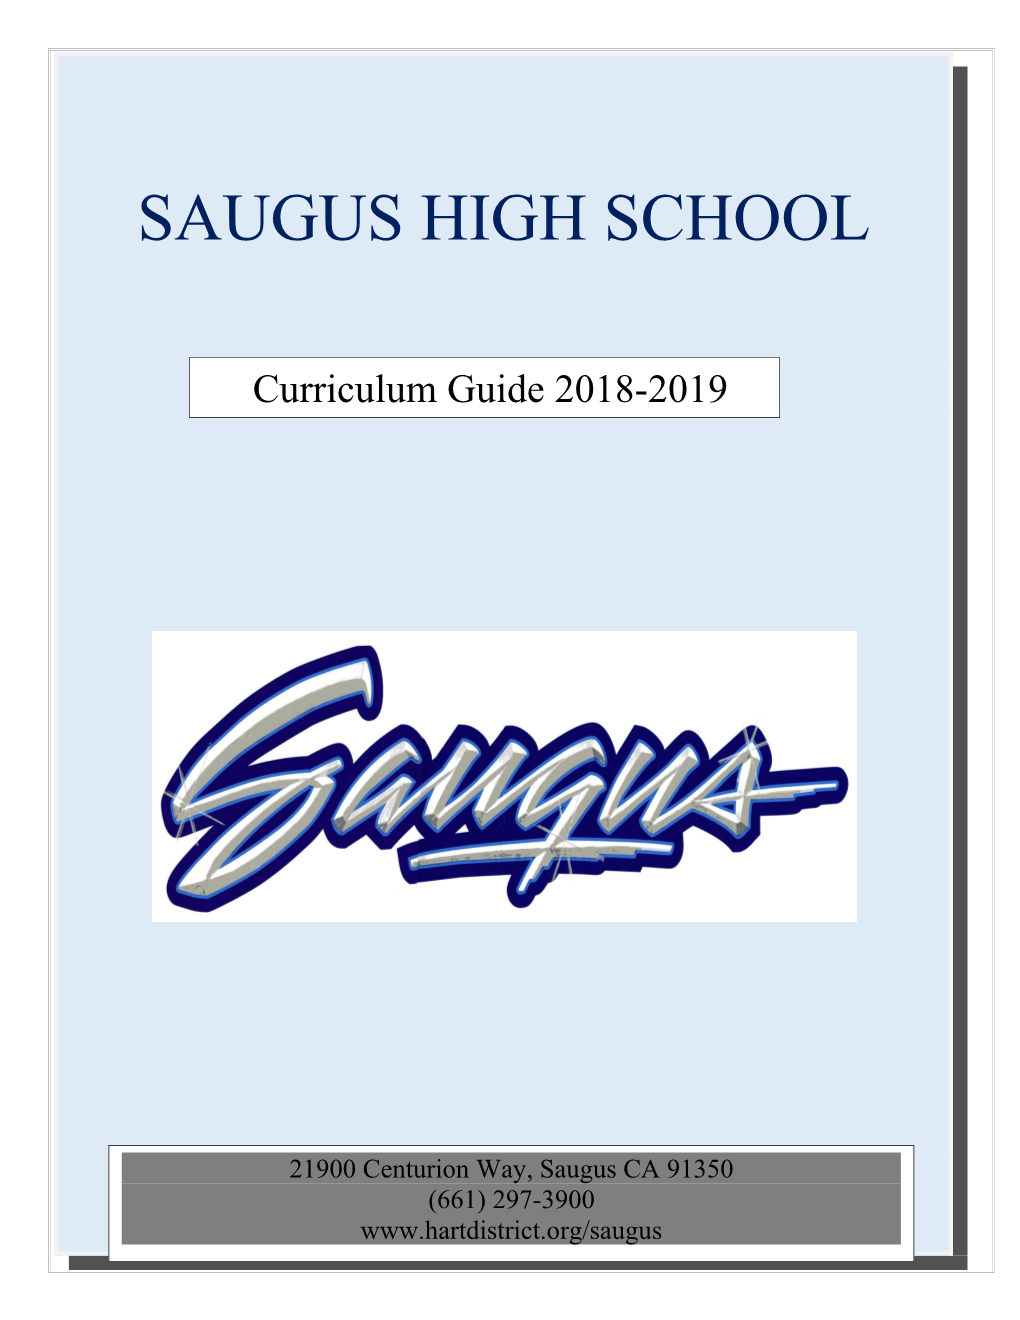 Saugus High School